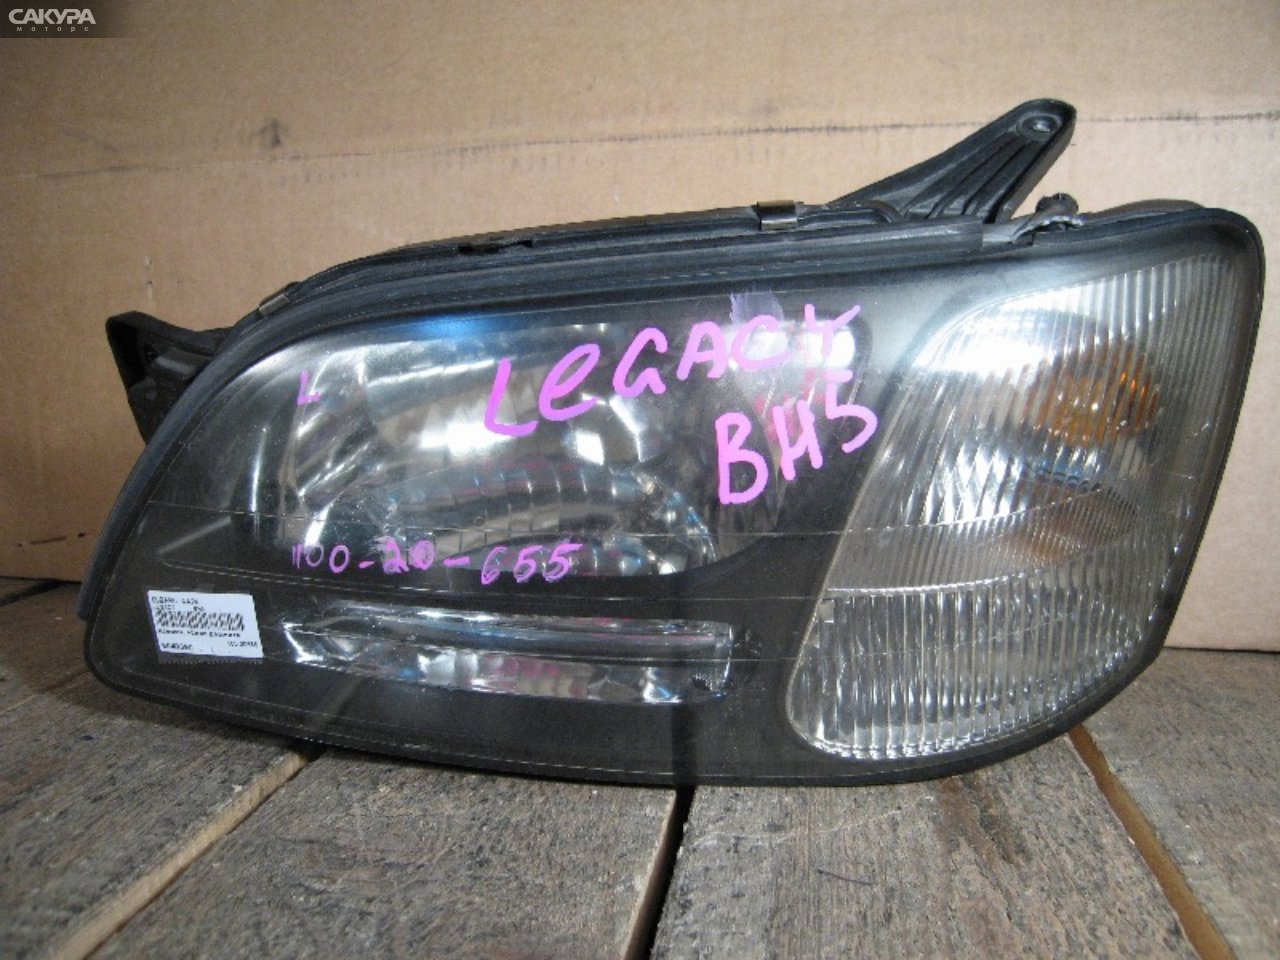 Фара левая Subaru Legacy BH5 100-20655: купить в Сакура Абакан.